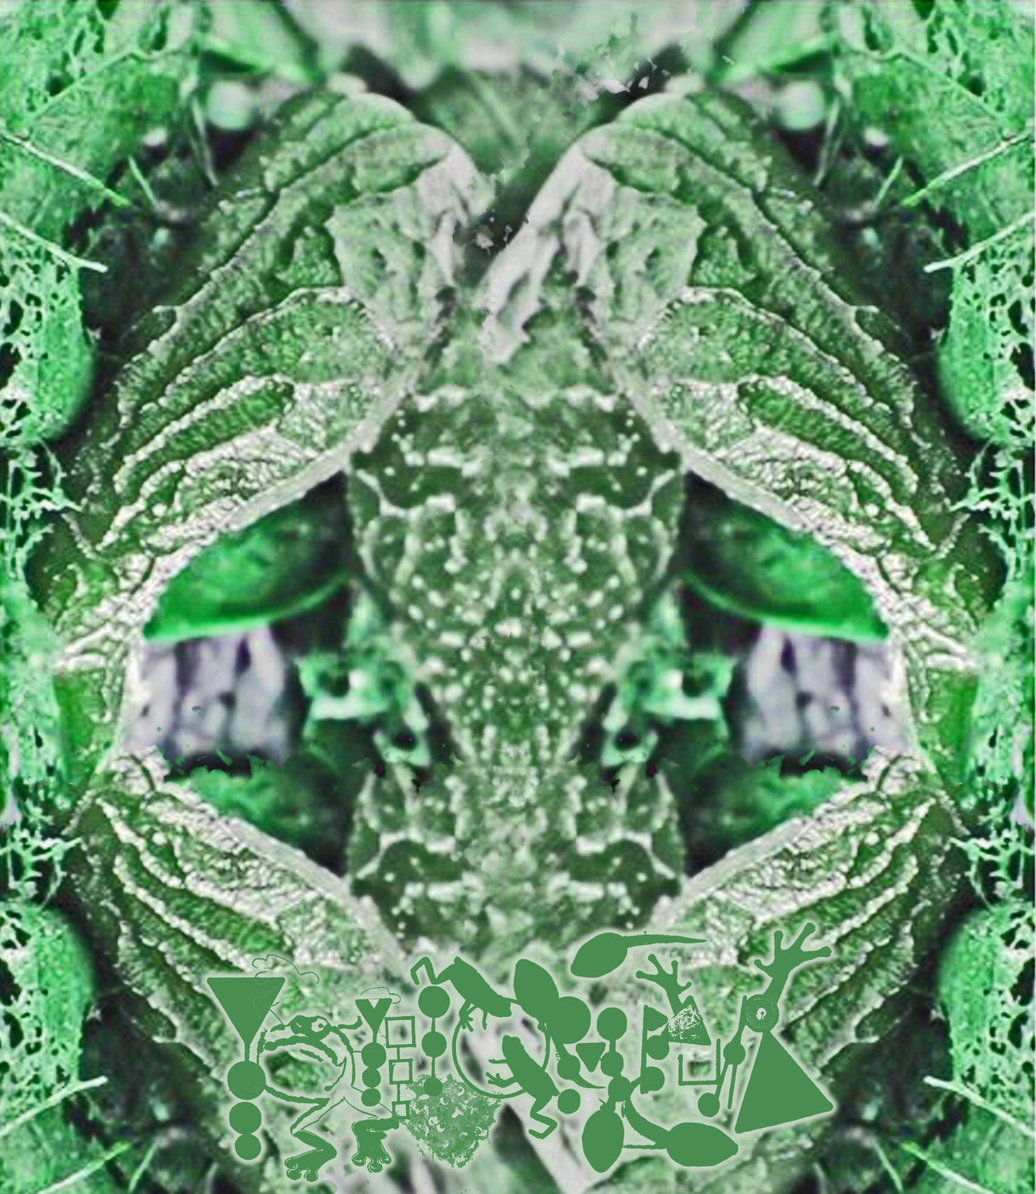 PHYLLOMEDUSA - Green Mothaur cover 